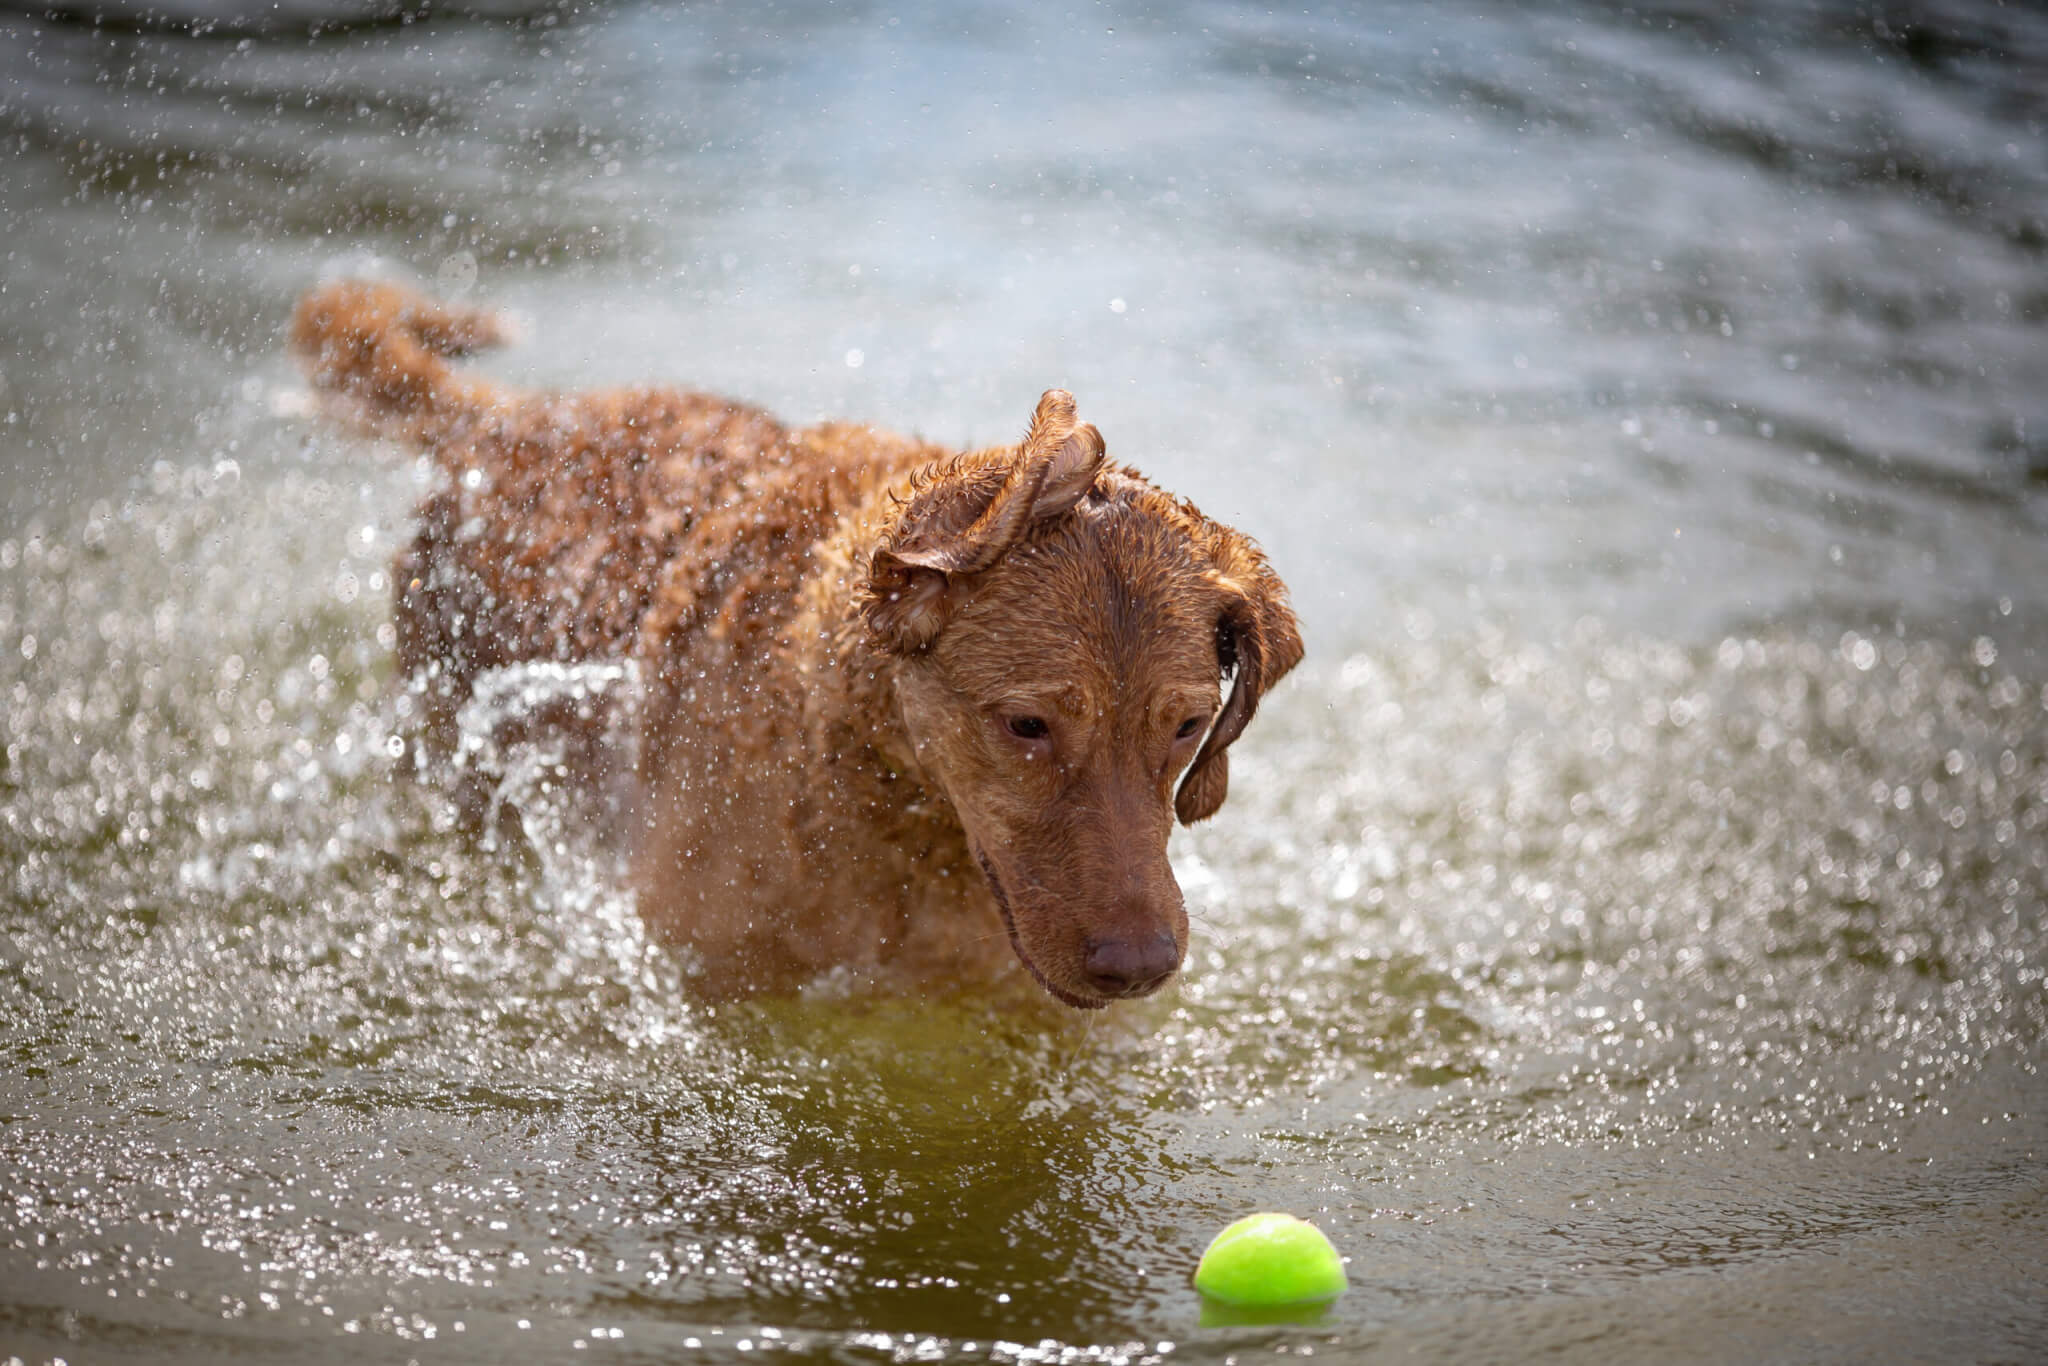 Chesapeake Bay Retriever playing ball in the water